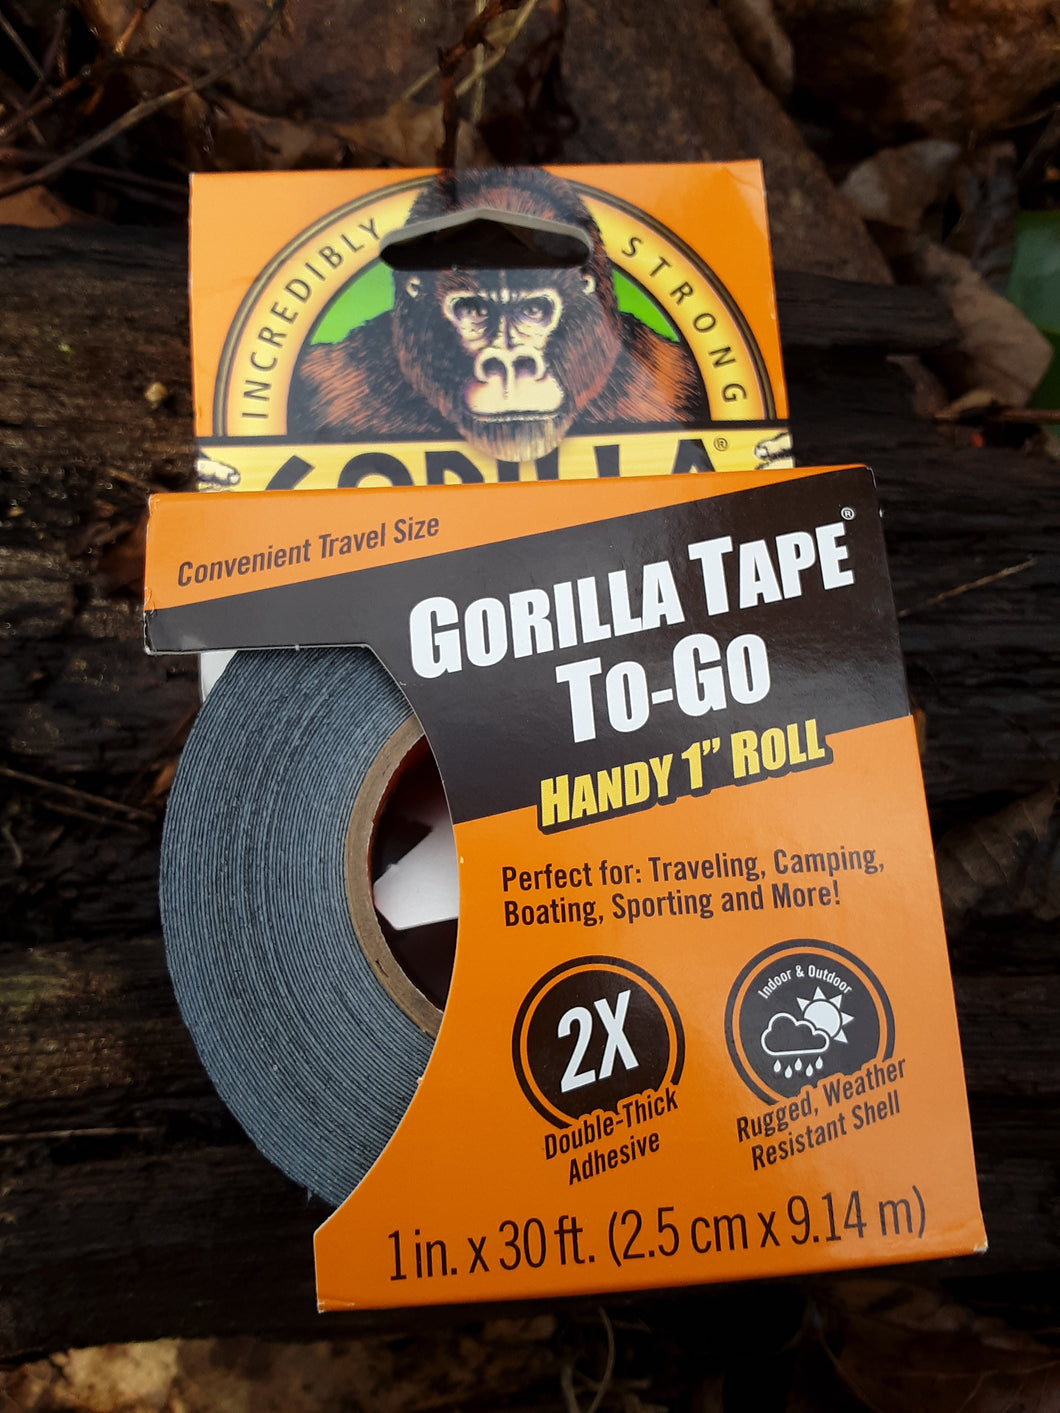 Gorilla tape to go